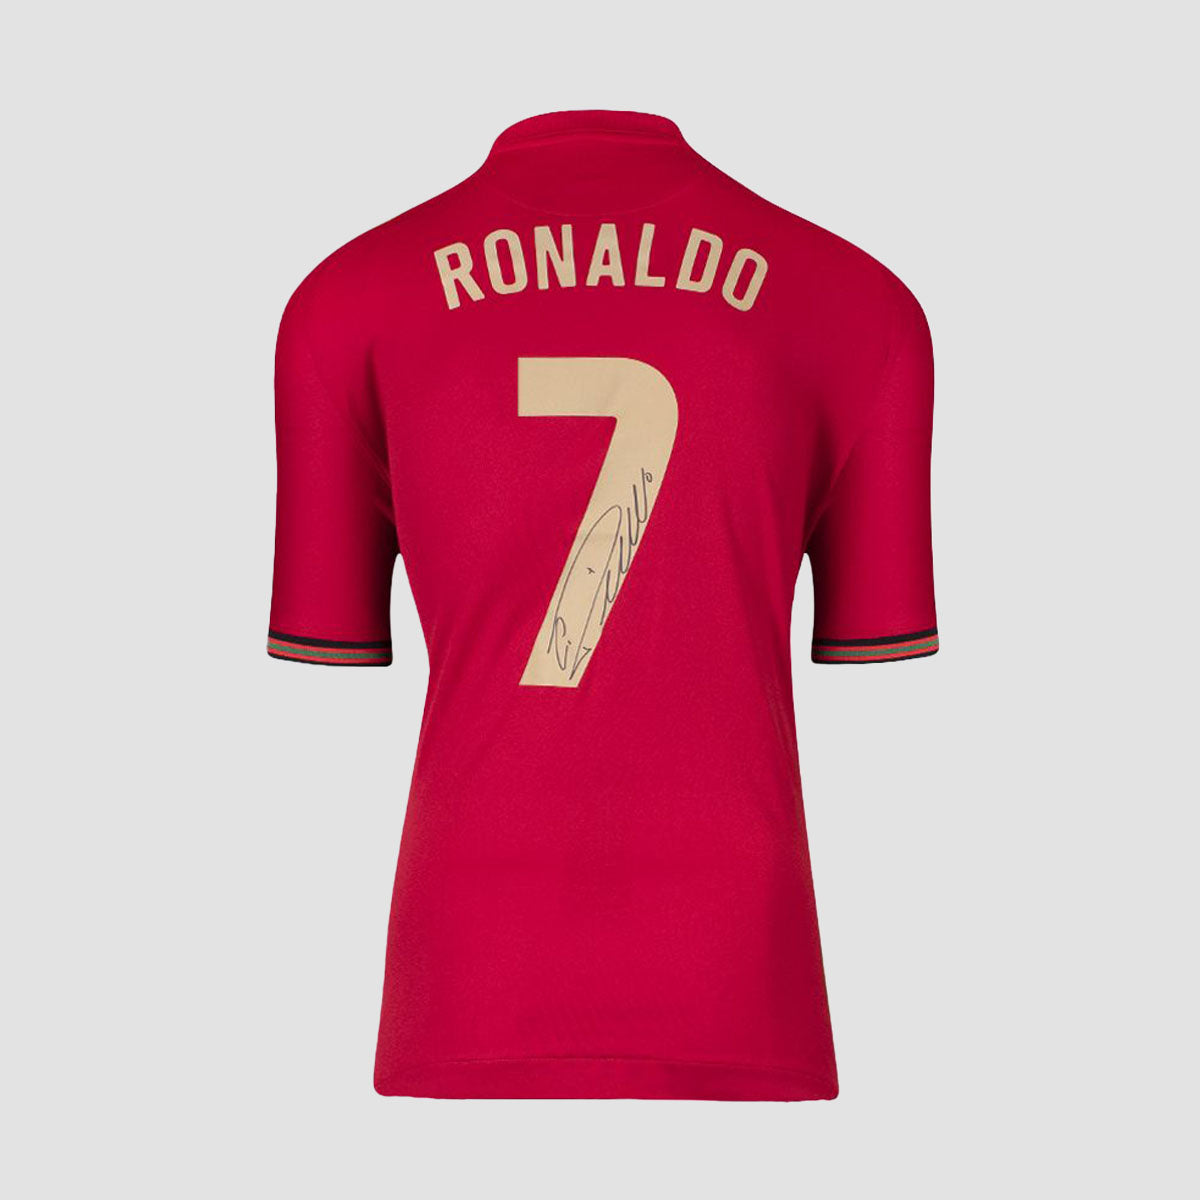 Cristiano Ronaldo Signed 2016 Portugal Shirt (Boxed)